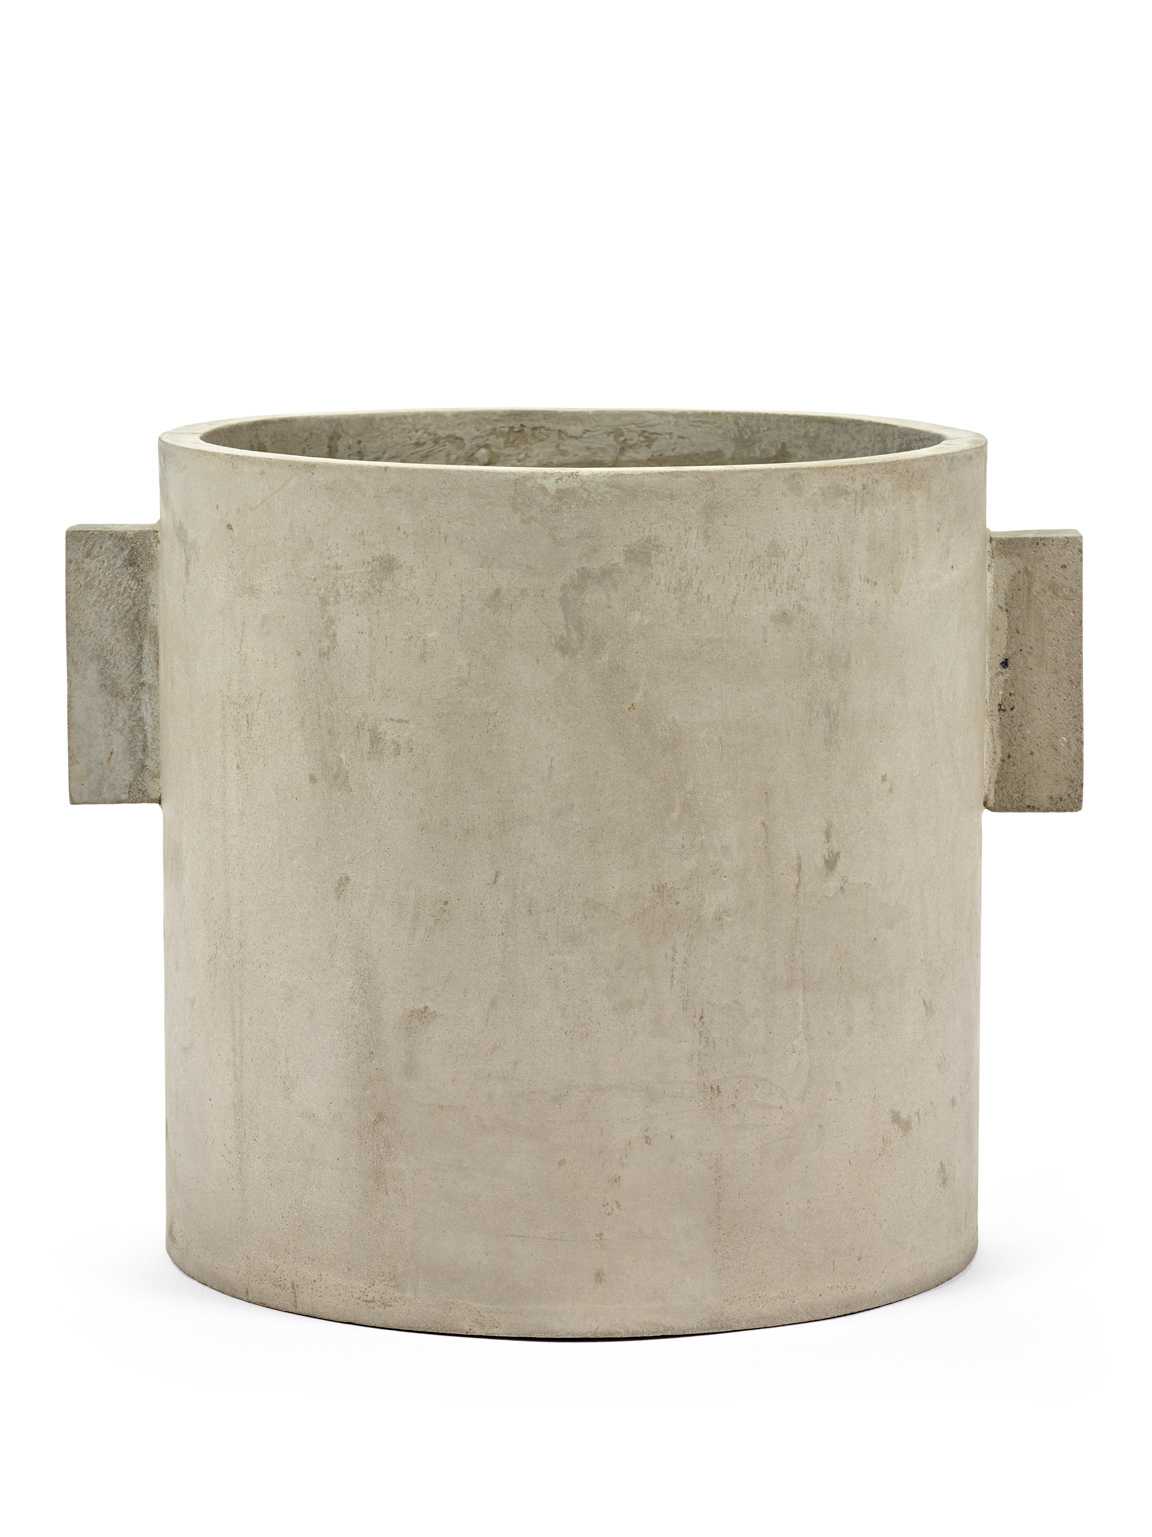 Round Concrete Pot with Handles